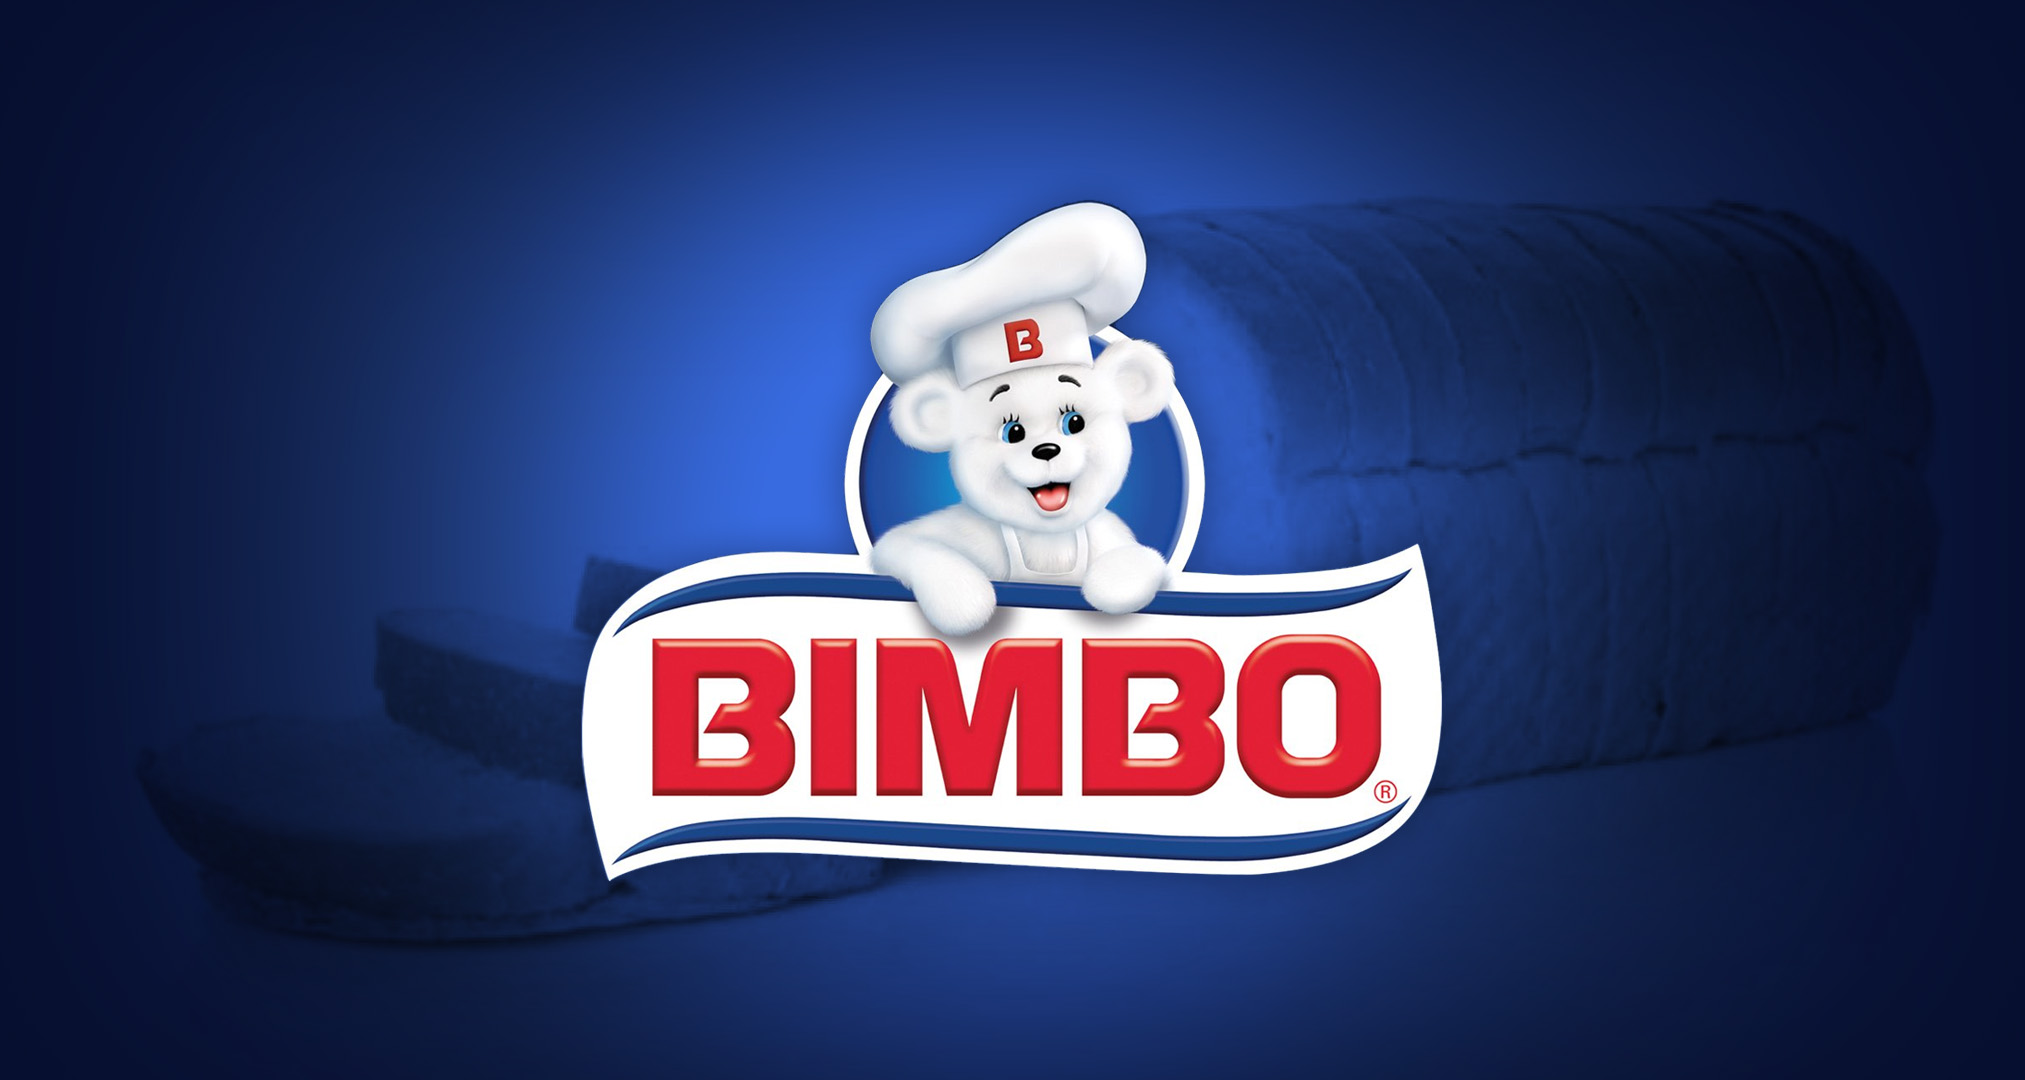 Historia de Bimbo